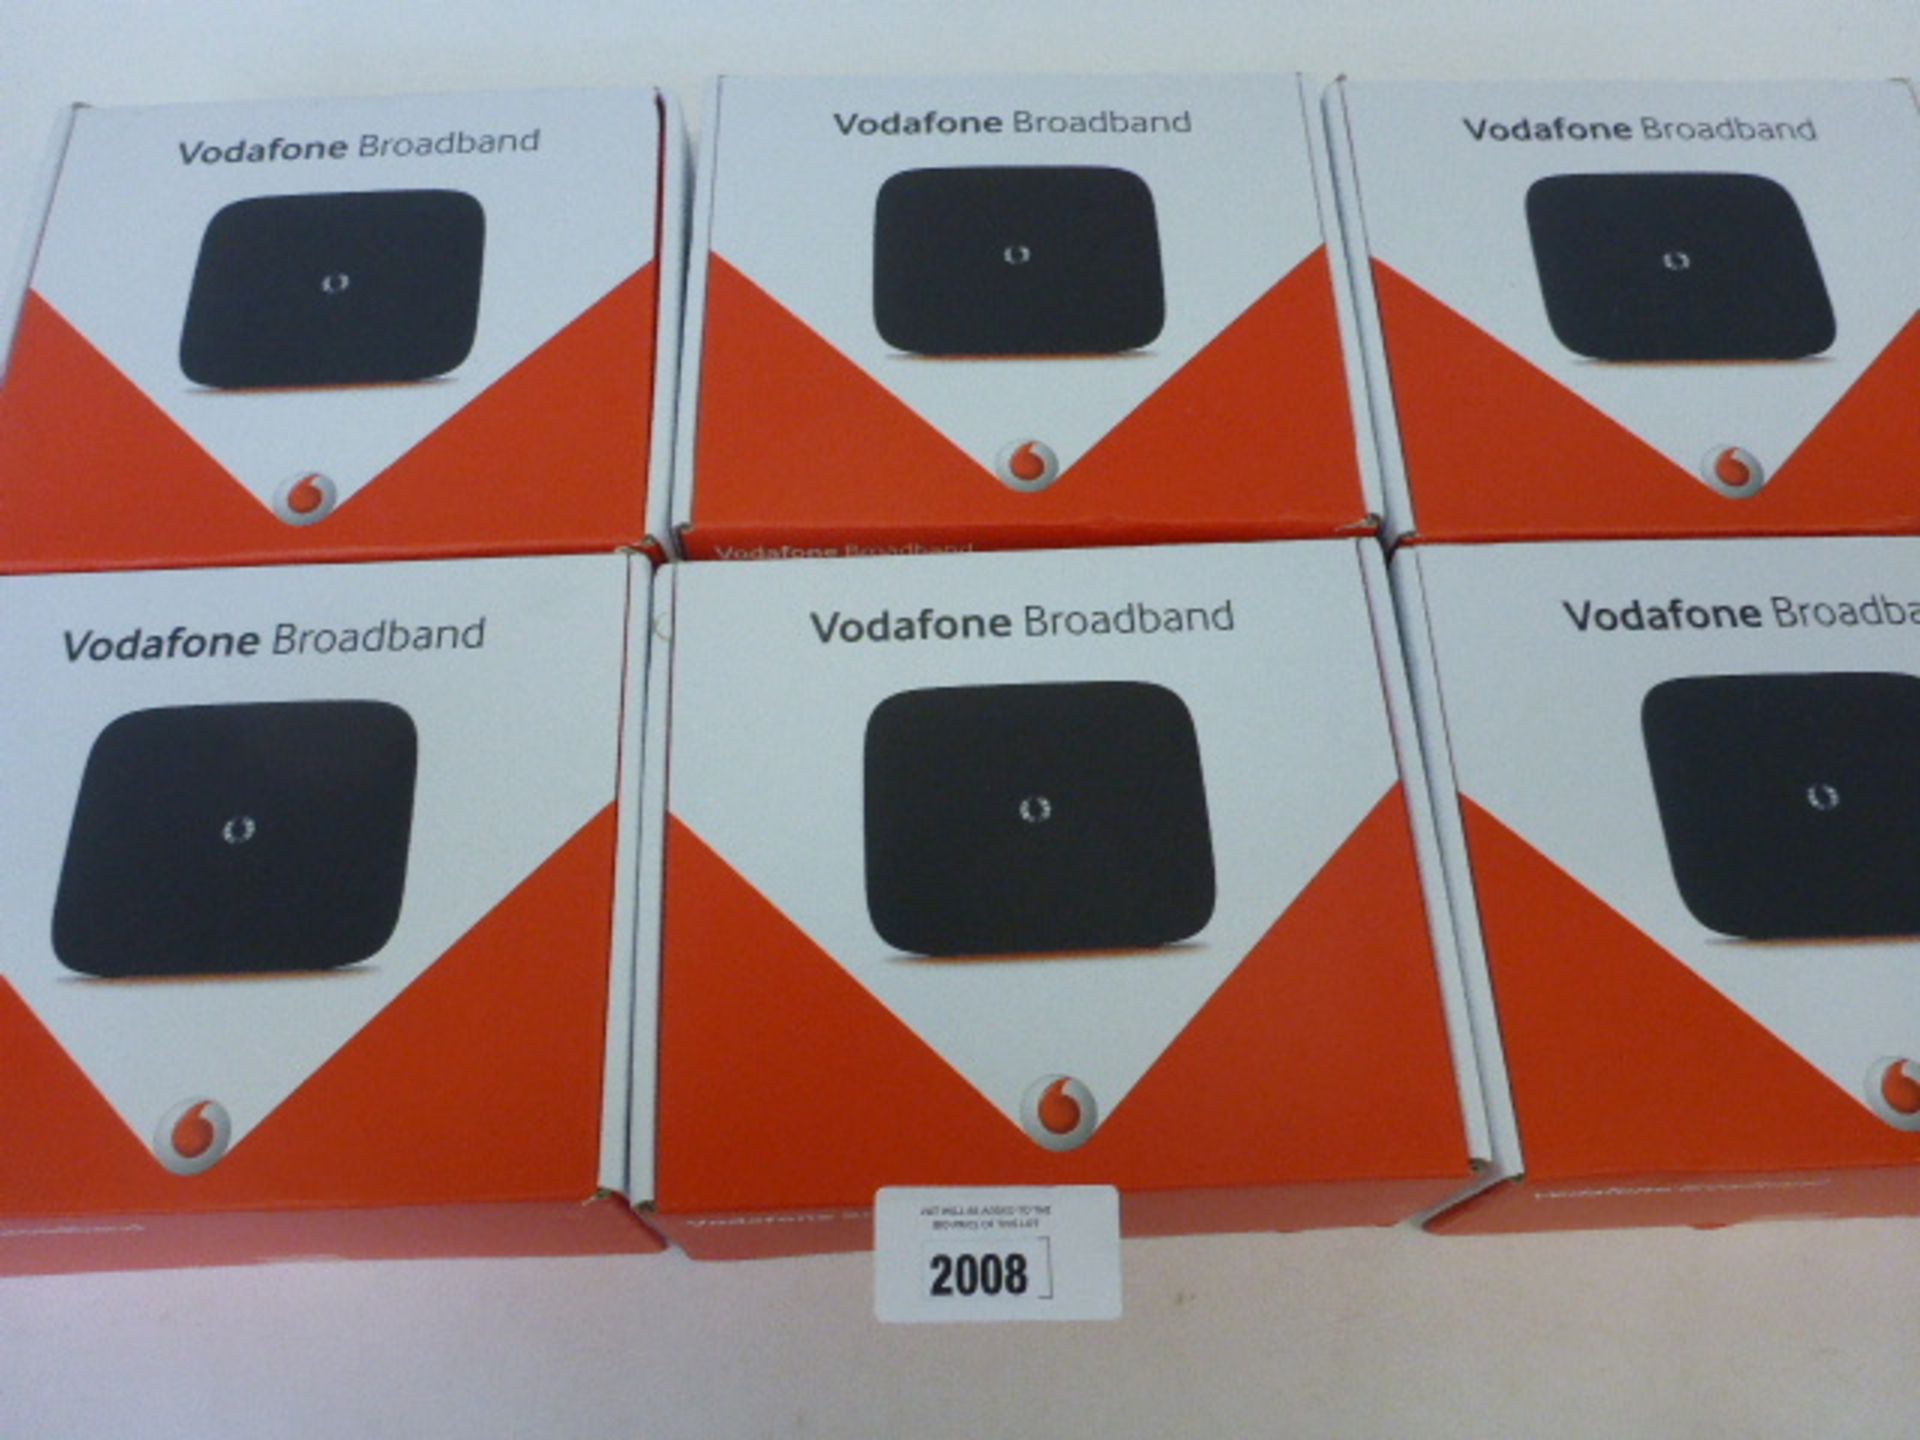 6 x Vodafone broadband routers